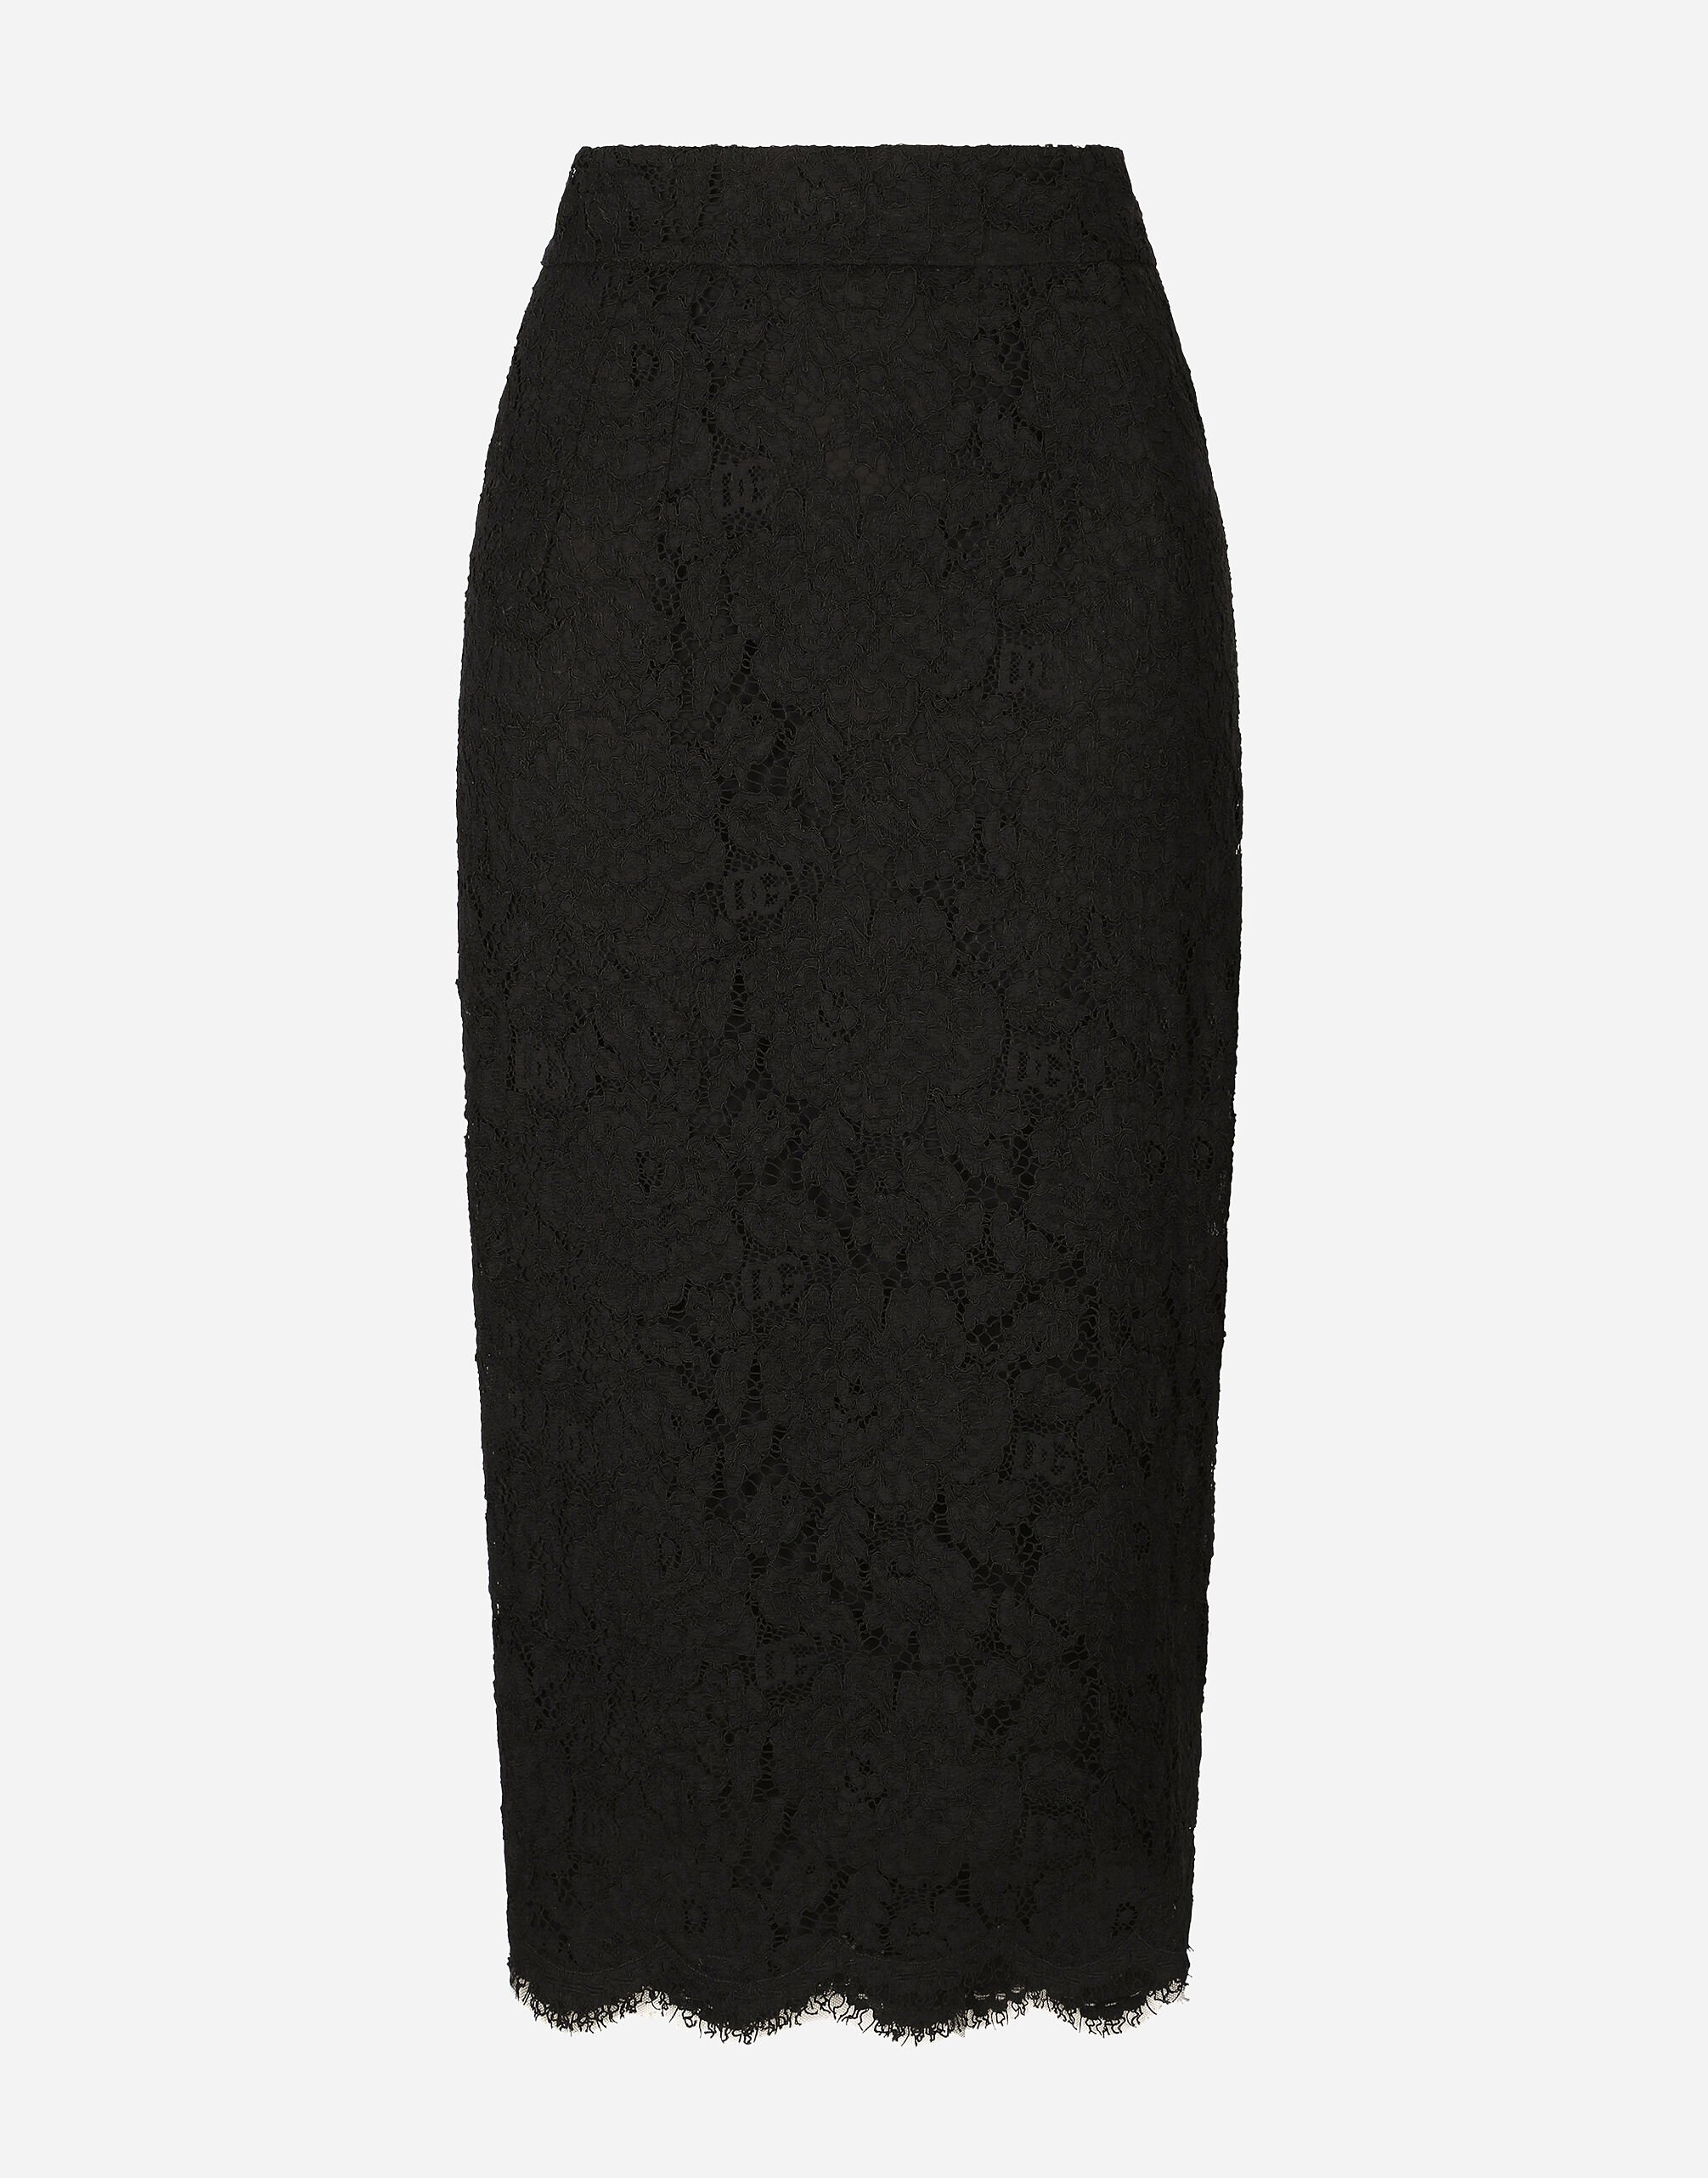 Dolce & Gabbana ミディスカート ストレッチロゴレース ブラック F63G8TG9798